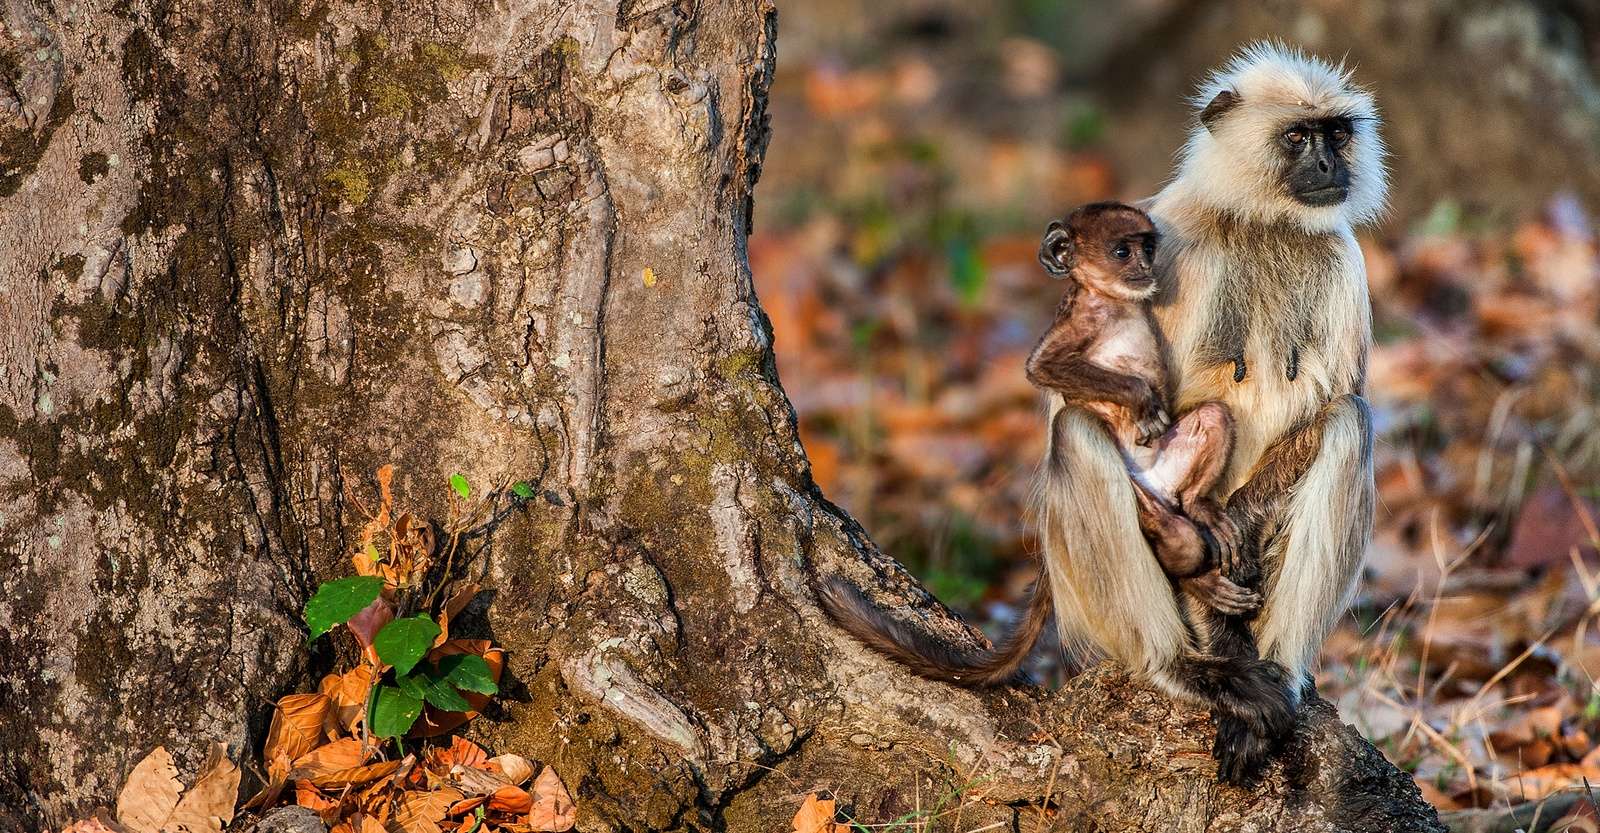 Hanuman langur monkey and baby, Ranthambore National Park, India.